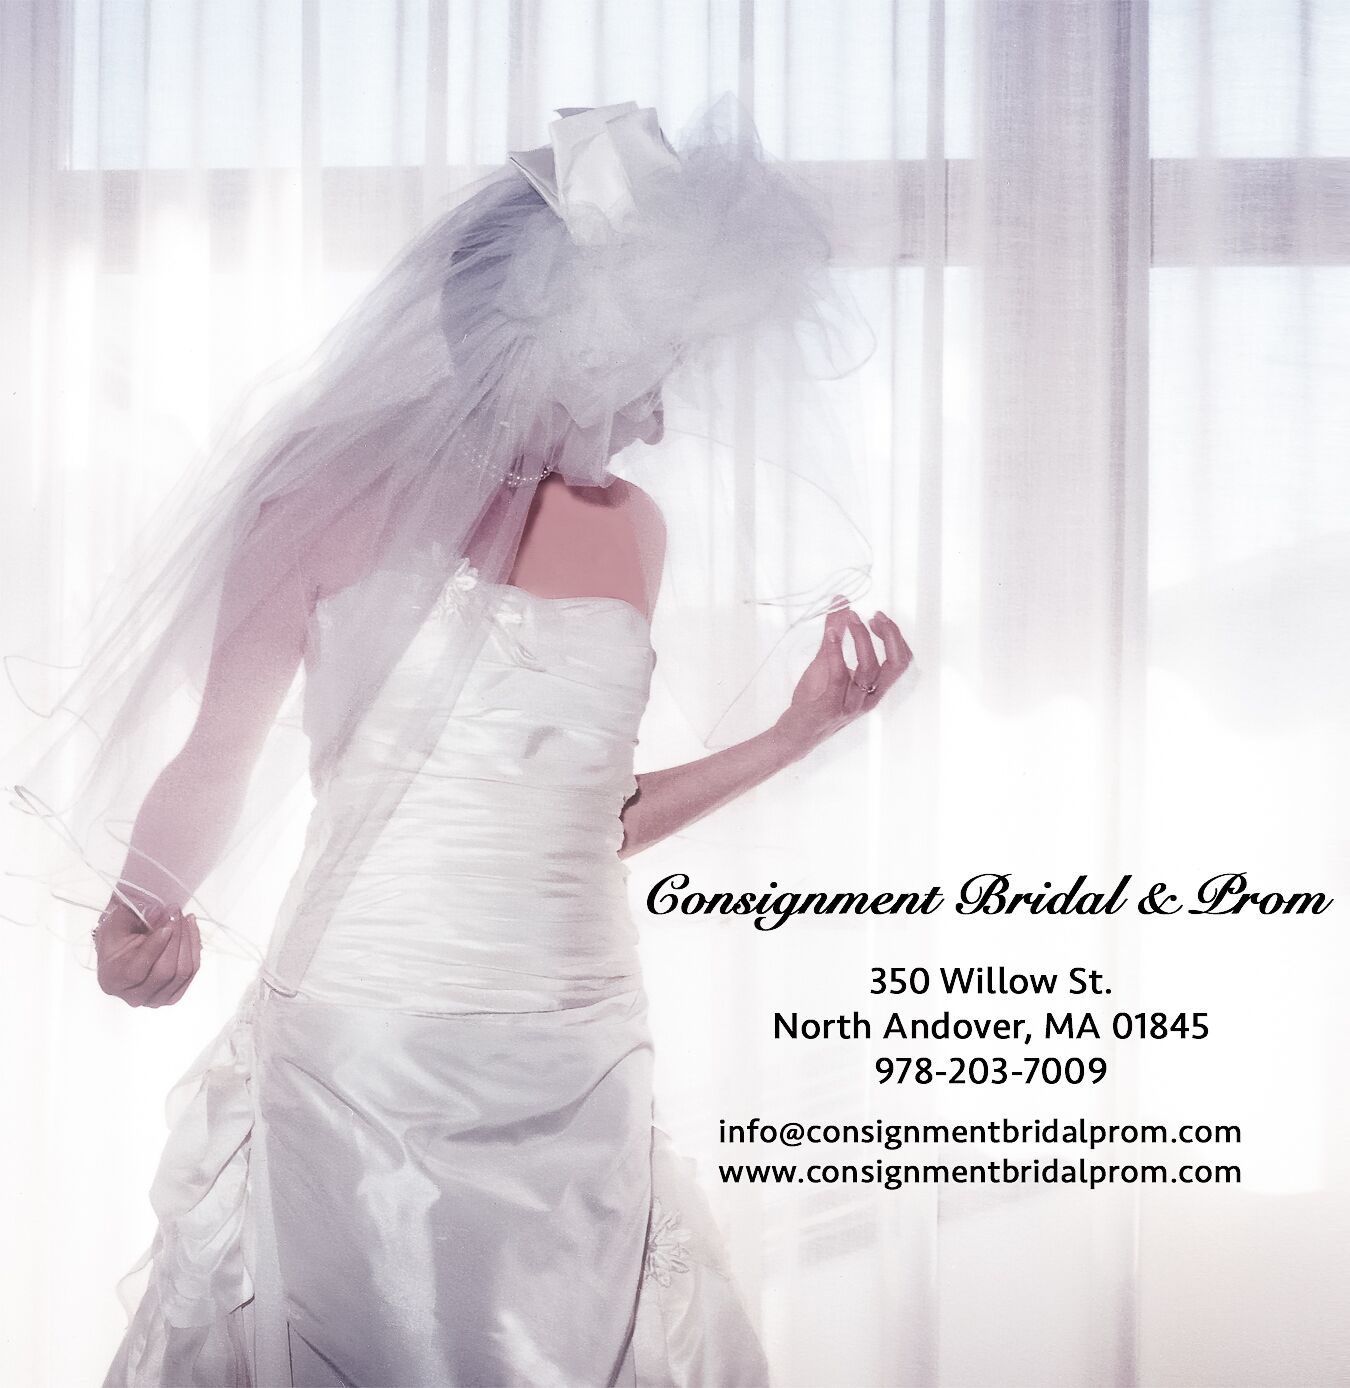 Consignment Bridal ☀ Prom | Bridal ...